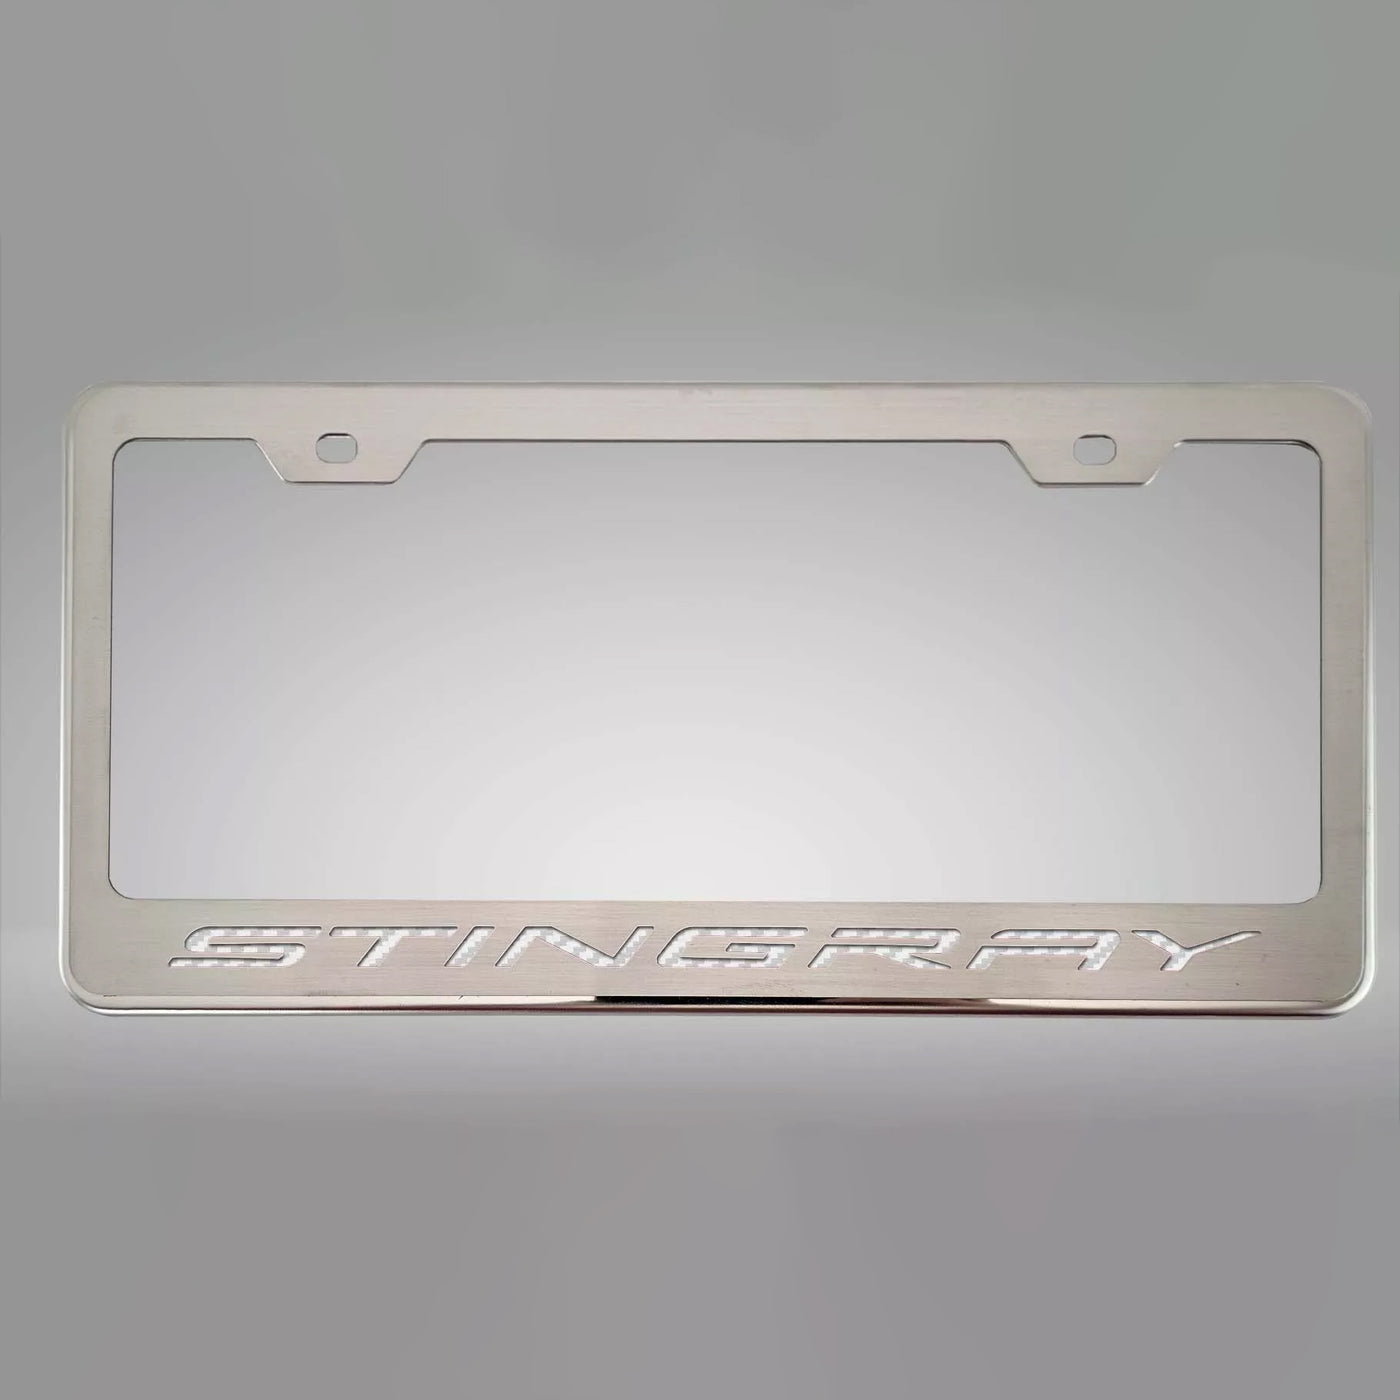 2020-2024 C8 Corvette - STINGRAY Style License Plate Frame - Brushed Stainless